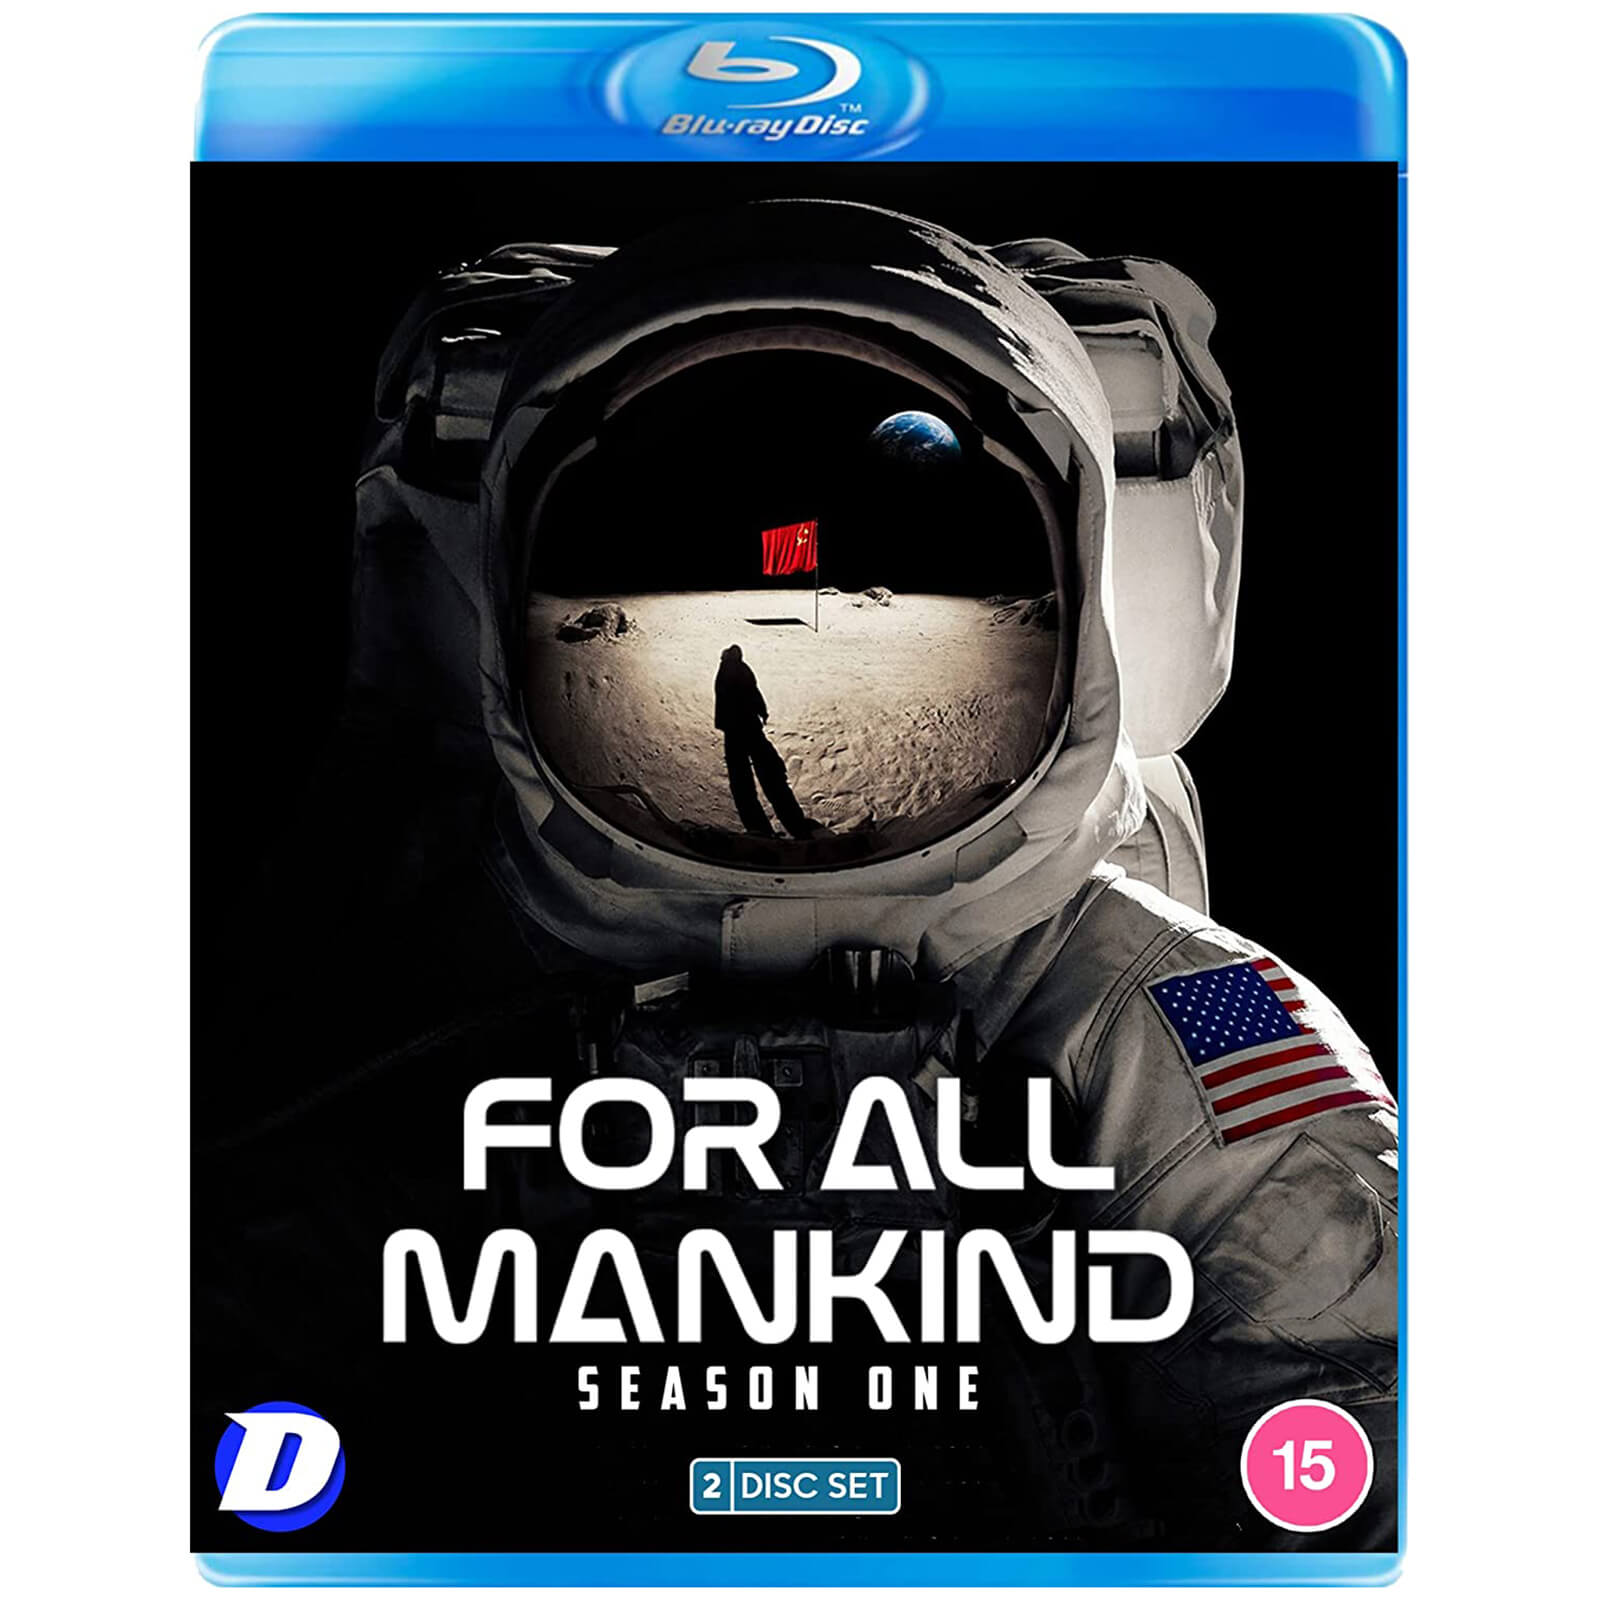 

For All Mankind: Season 1